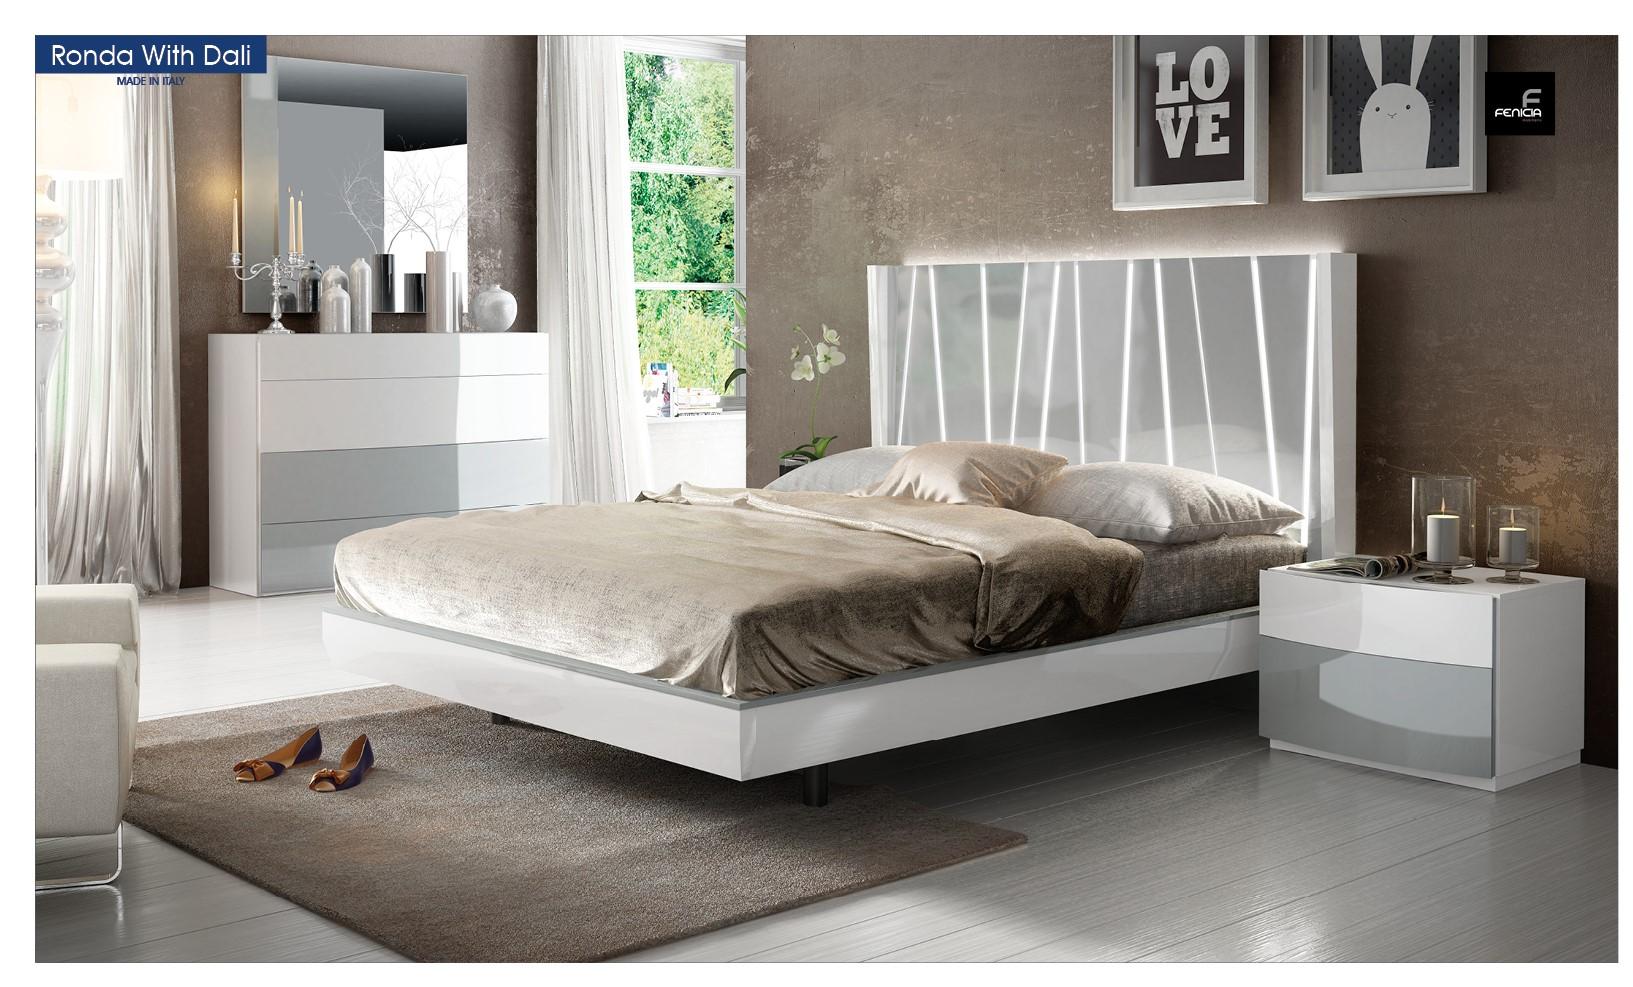 Contemporary Platform Bedroom Set Ronda DALI Ronda With Dali-EK-2NDM-5PC in White, Gray High Gloss Lacquer